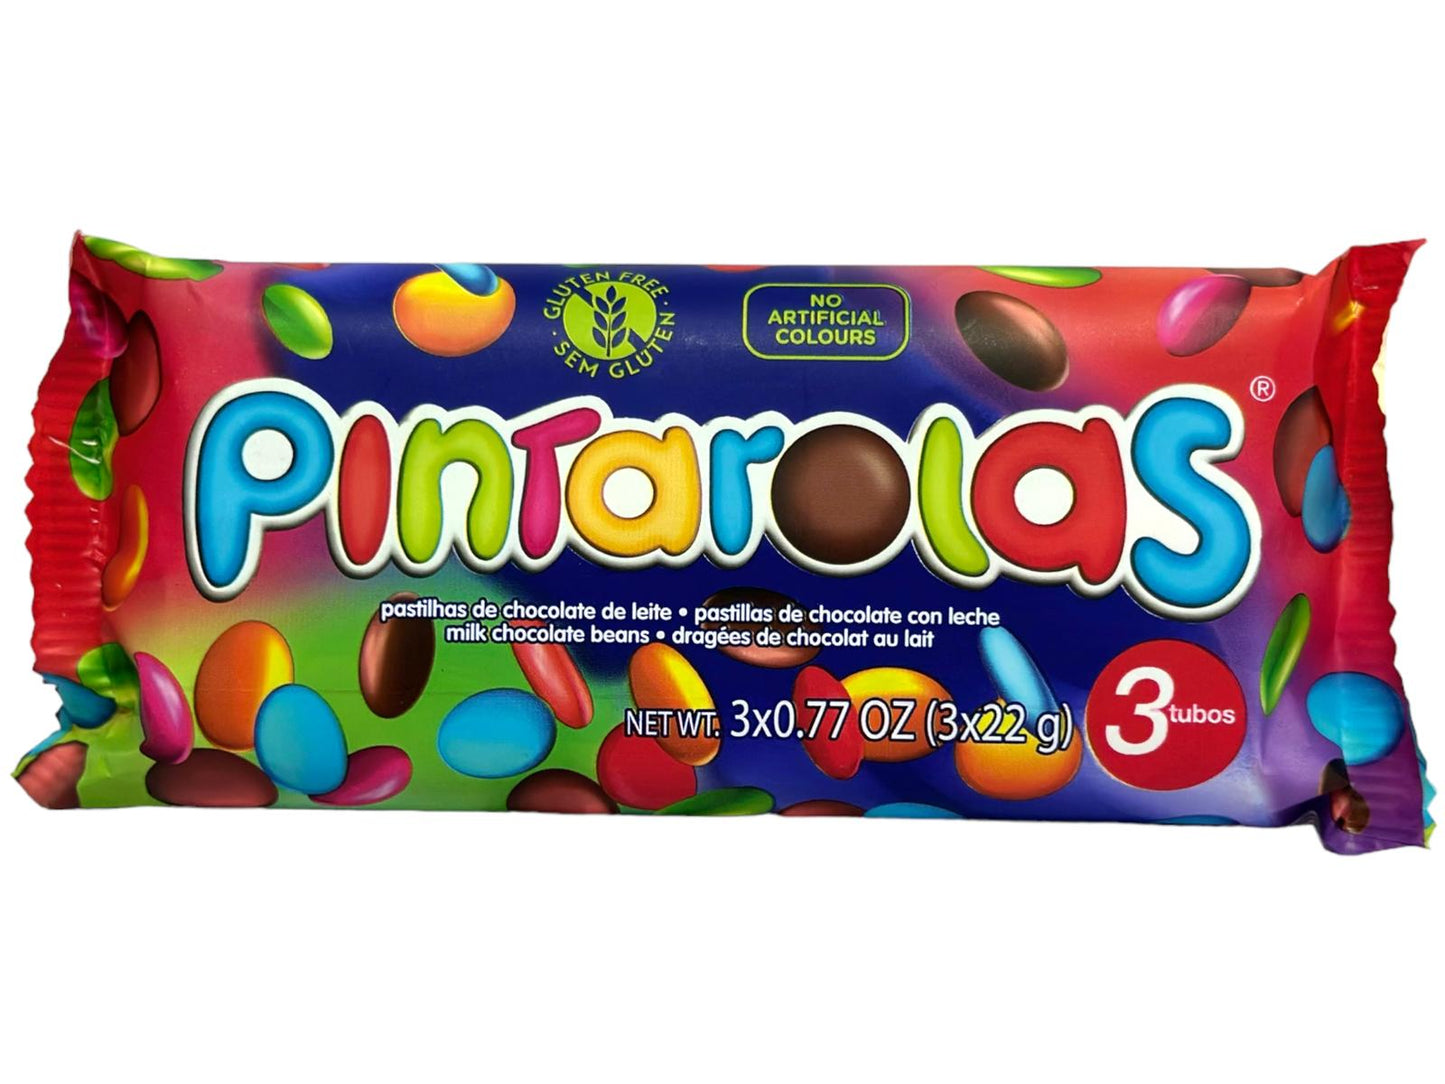 Pintarolas Milk Chocolate Sugar Coated Beans 66g - 6 pack 396 total